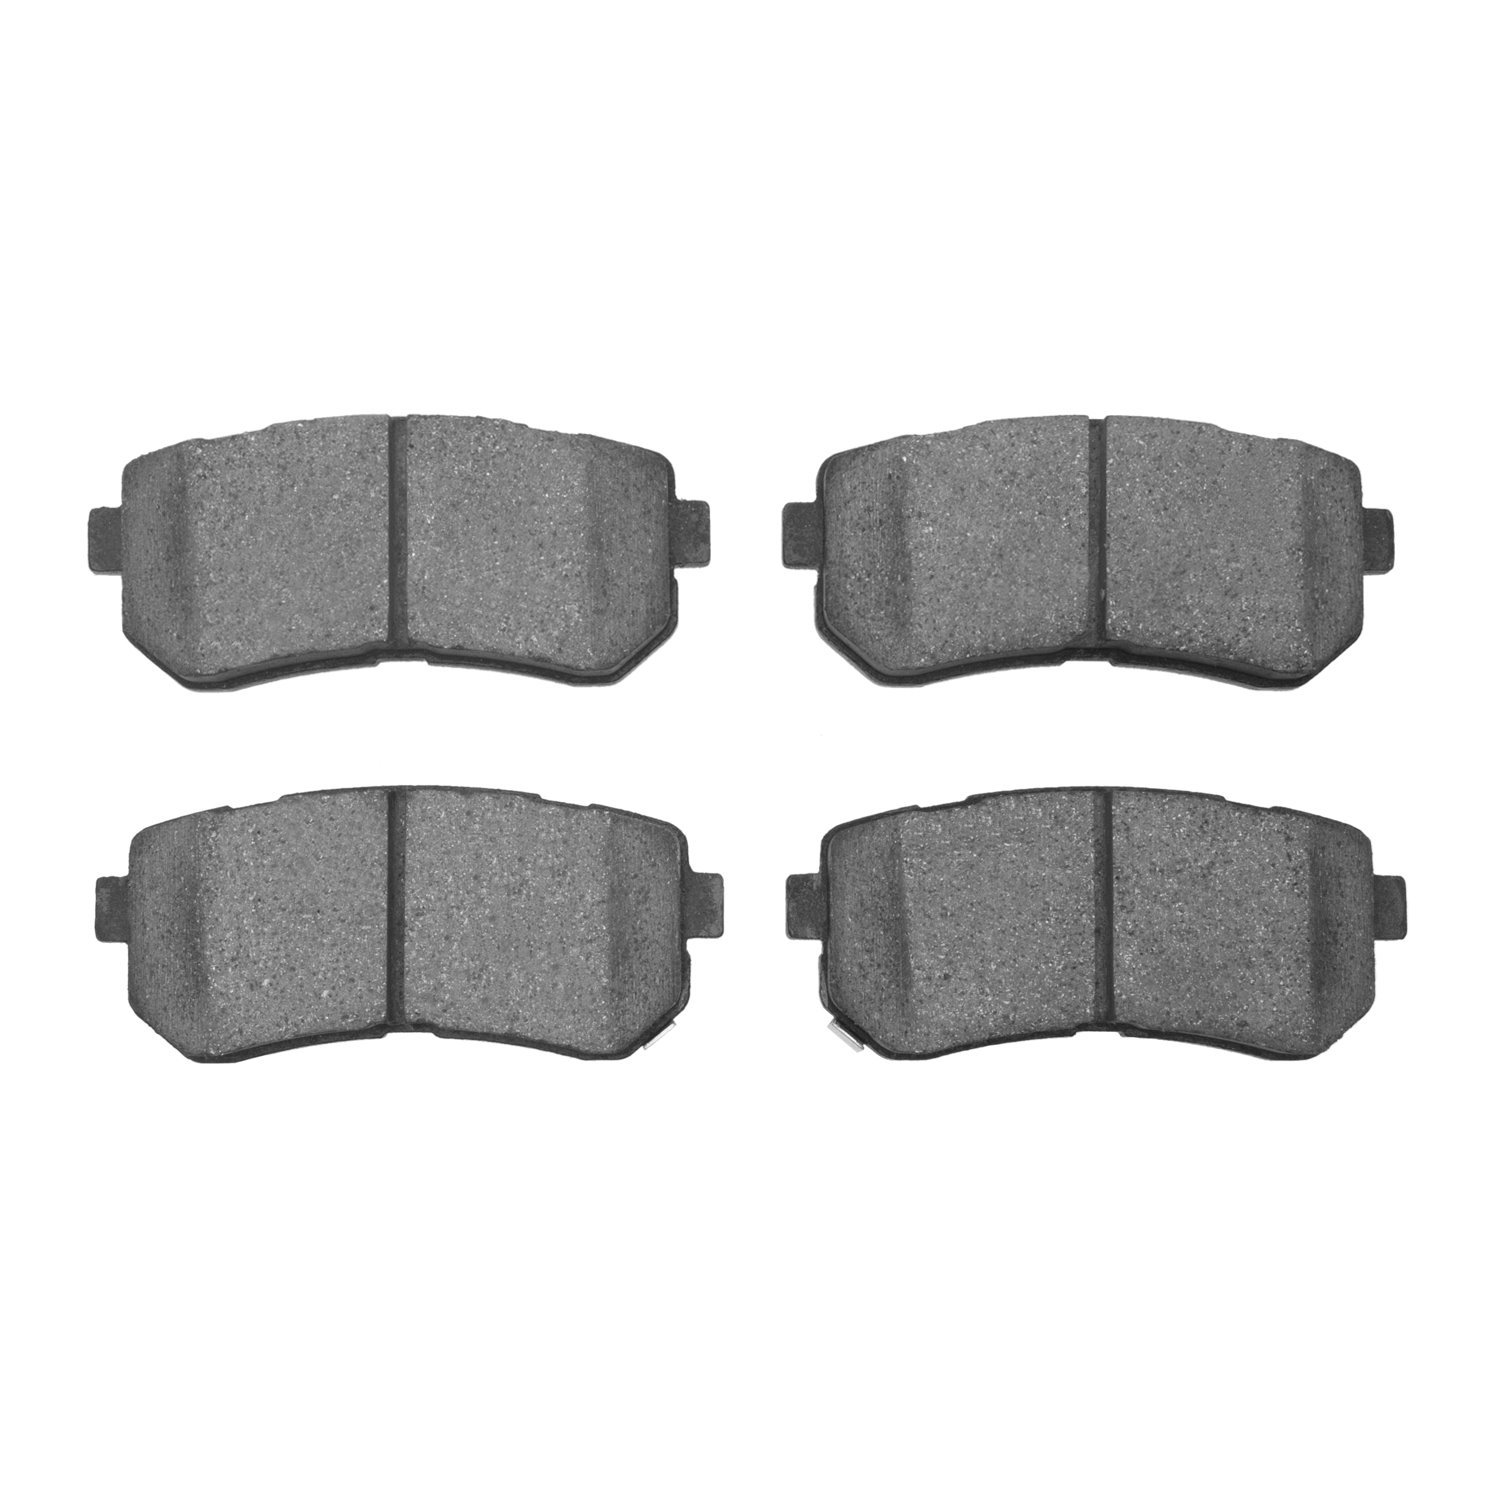 Ceramic Brake Pads, 2006-2020 Fits Multiple Makes/Models, Position: Rear